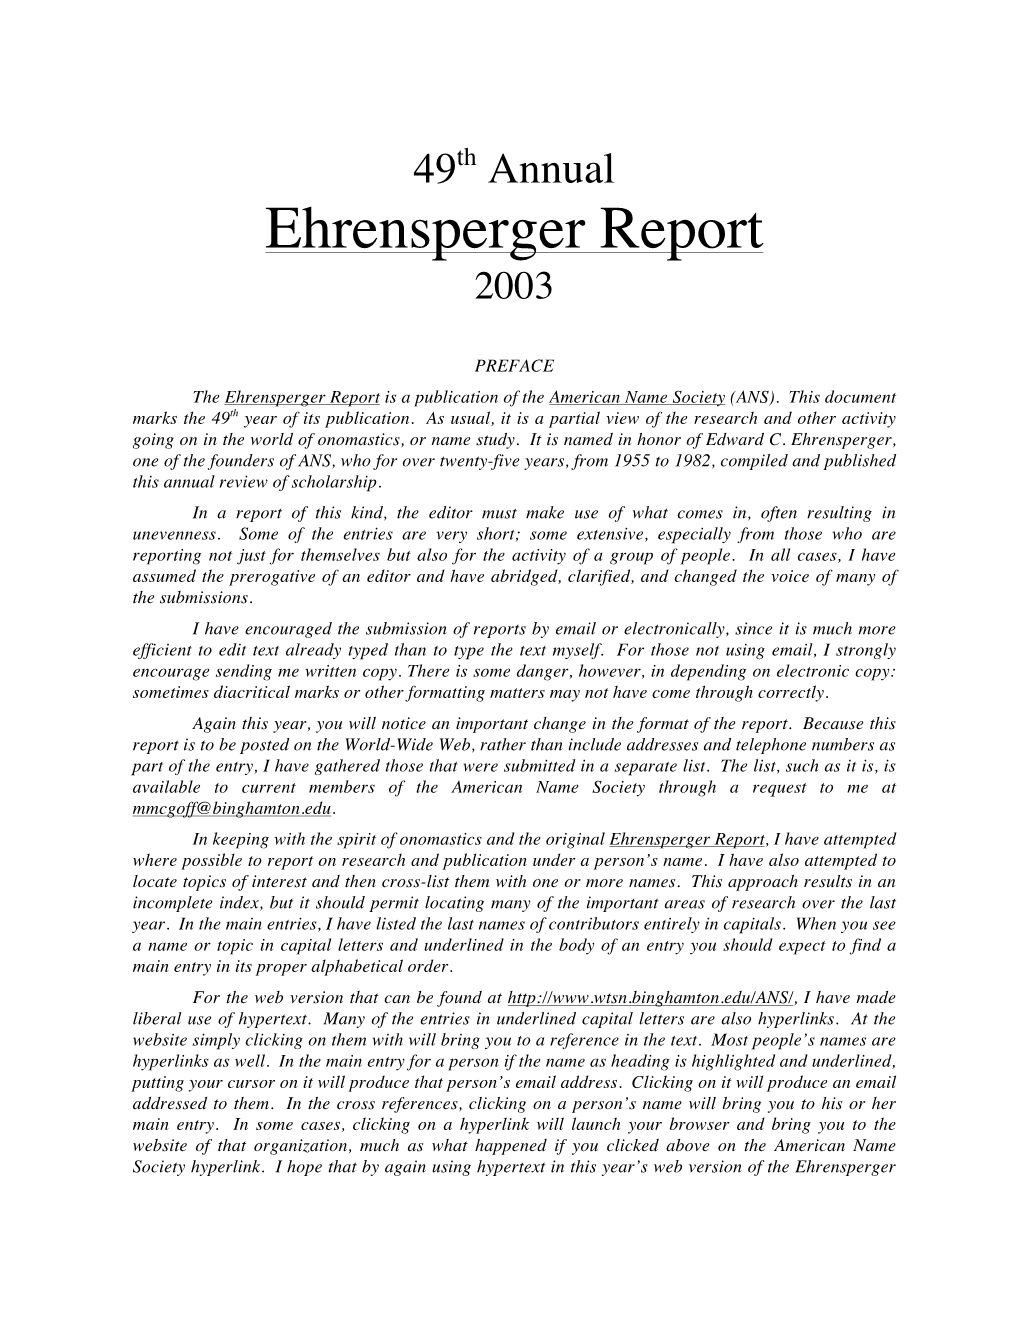 Ehrensperger Report 2003